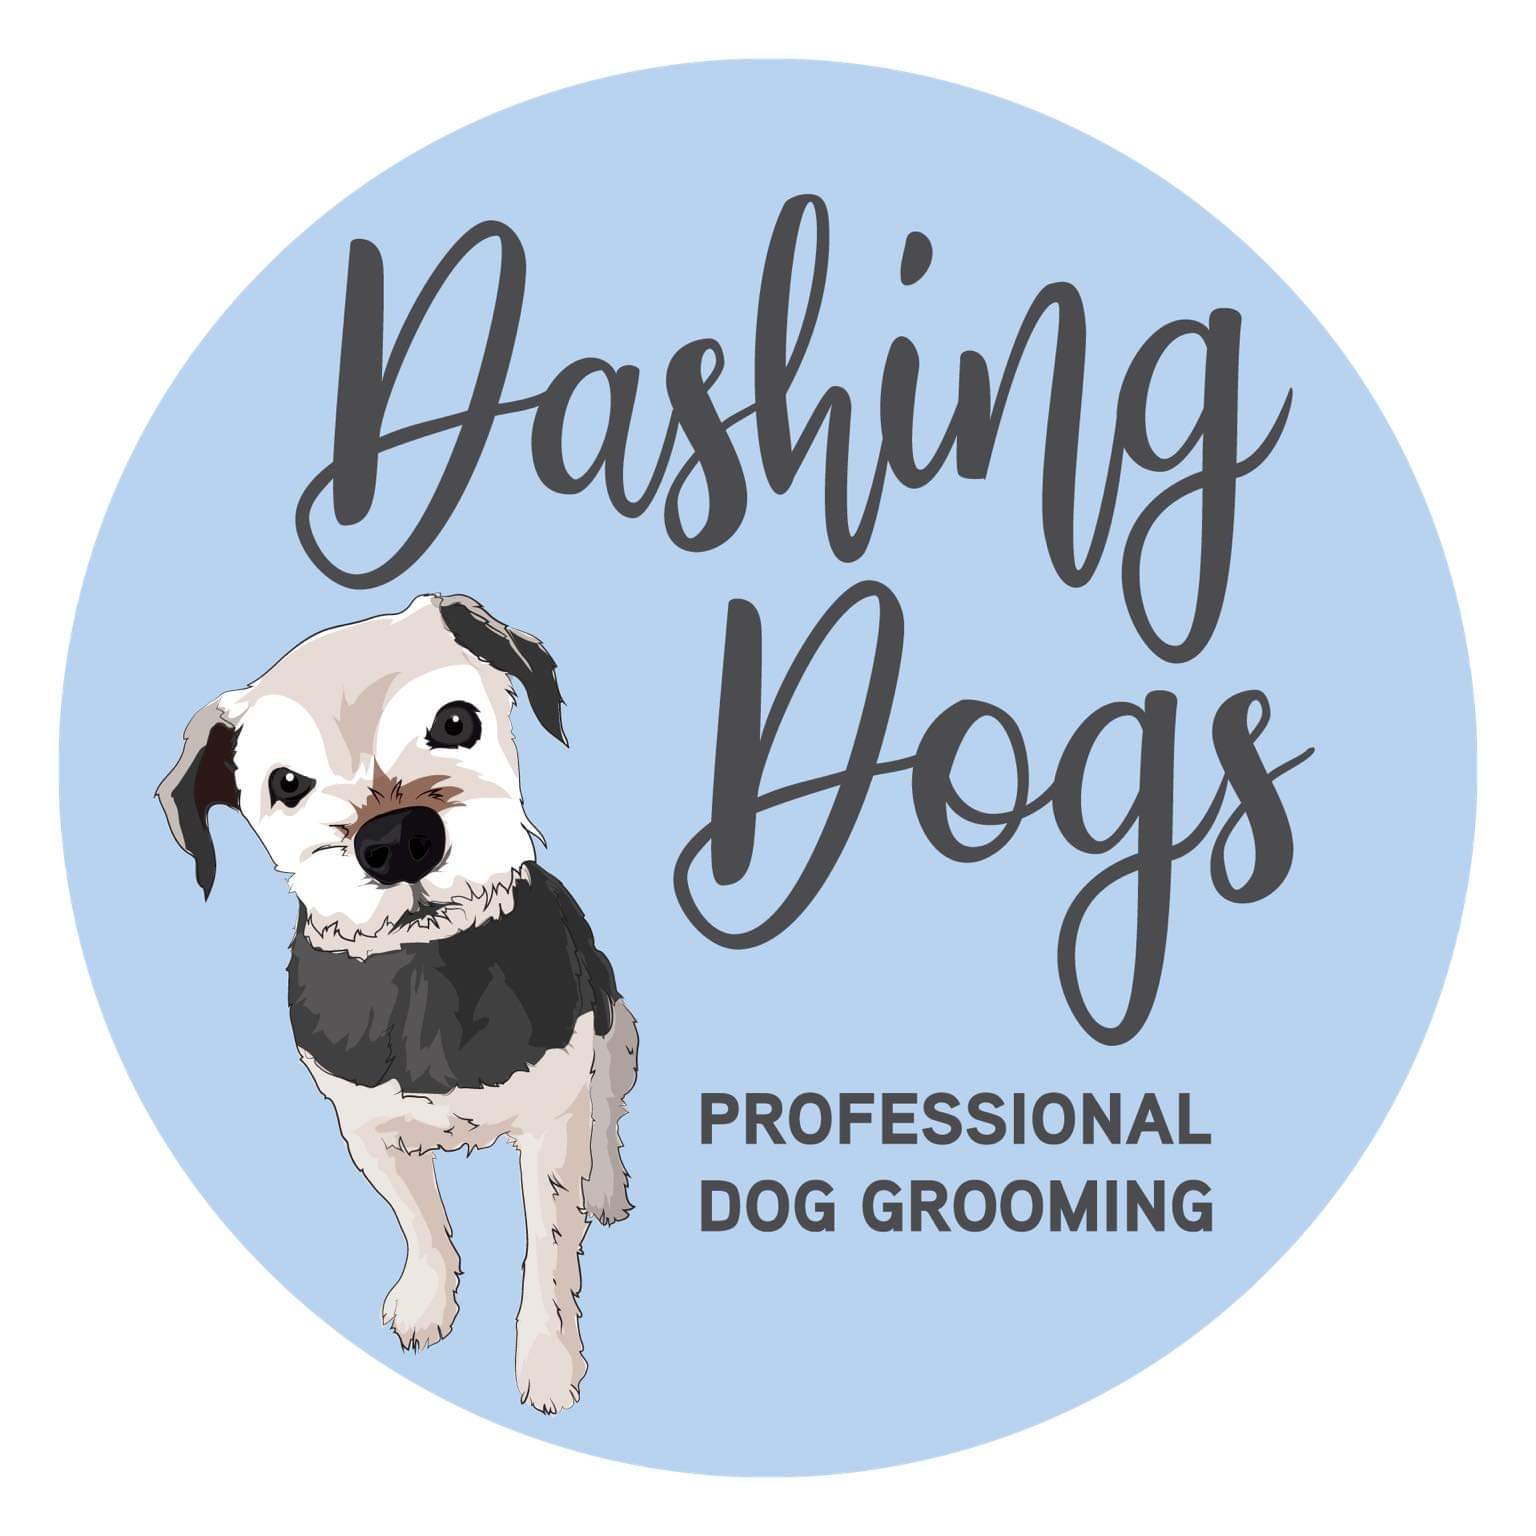 Dashing Dogs, an Alfreton based dog groomers